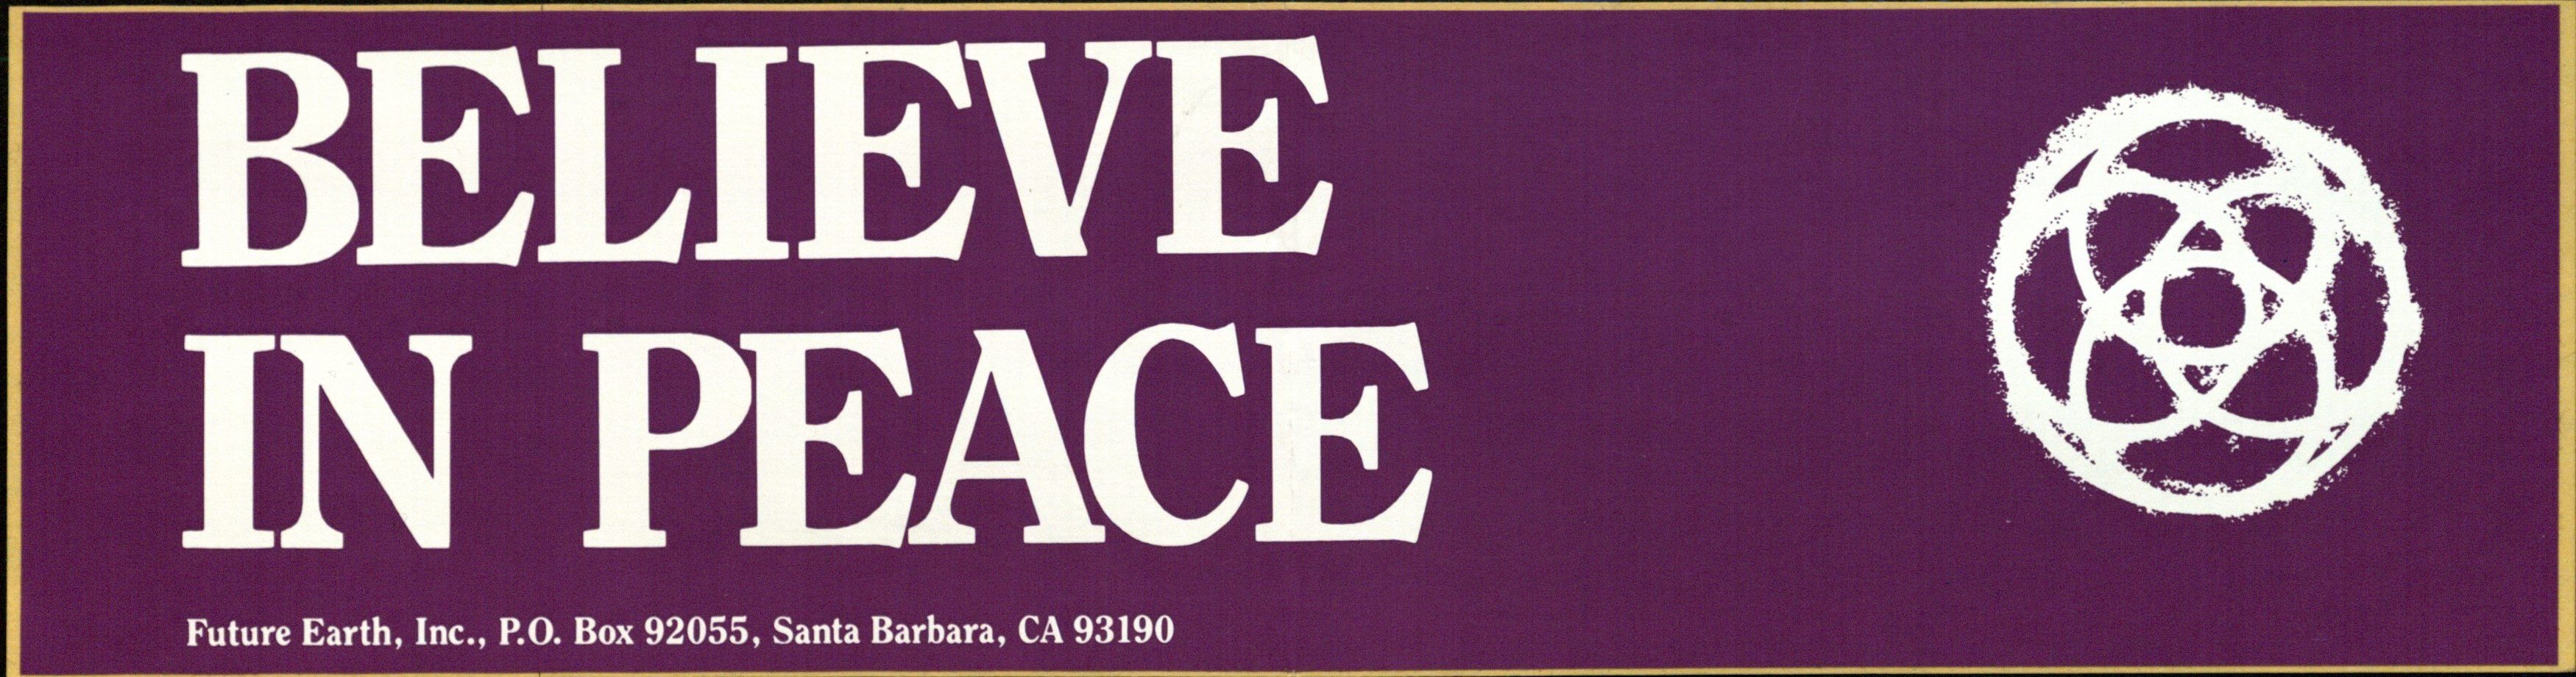 Bumper Sticker: Believe in Peace